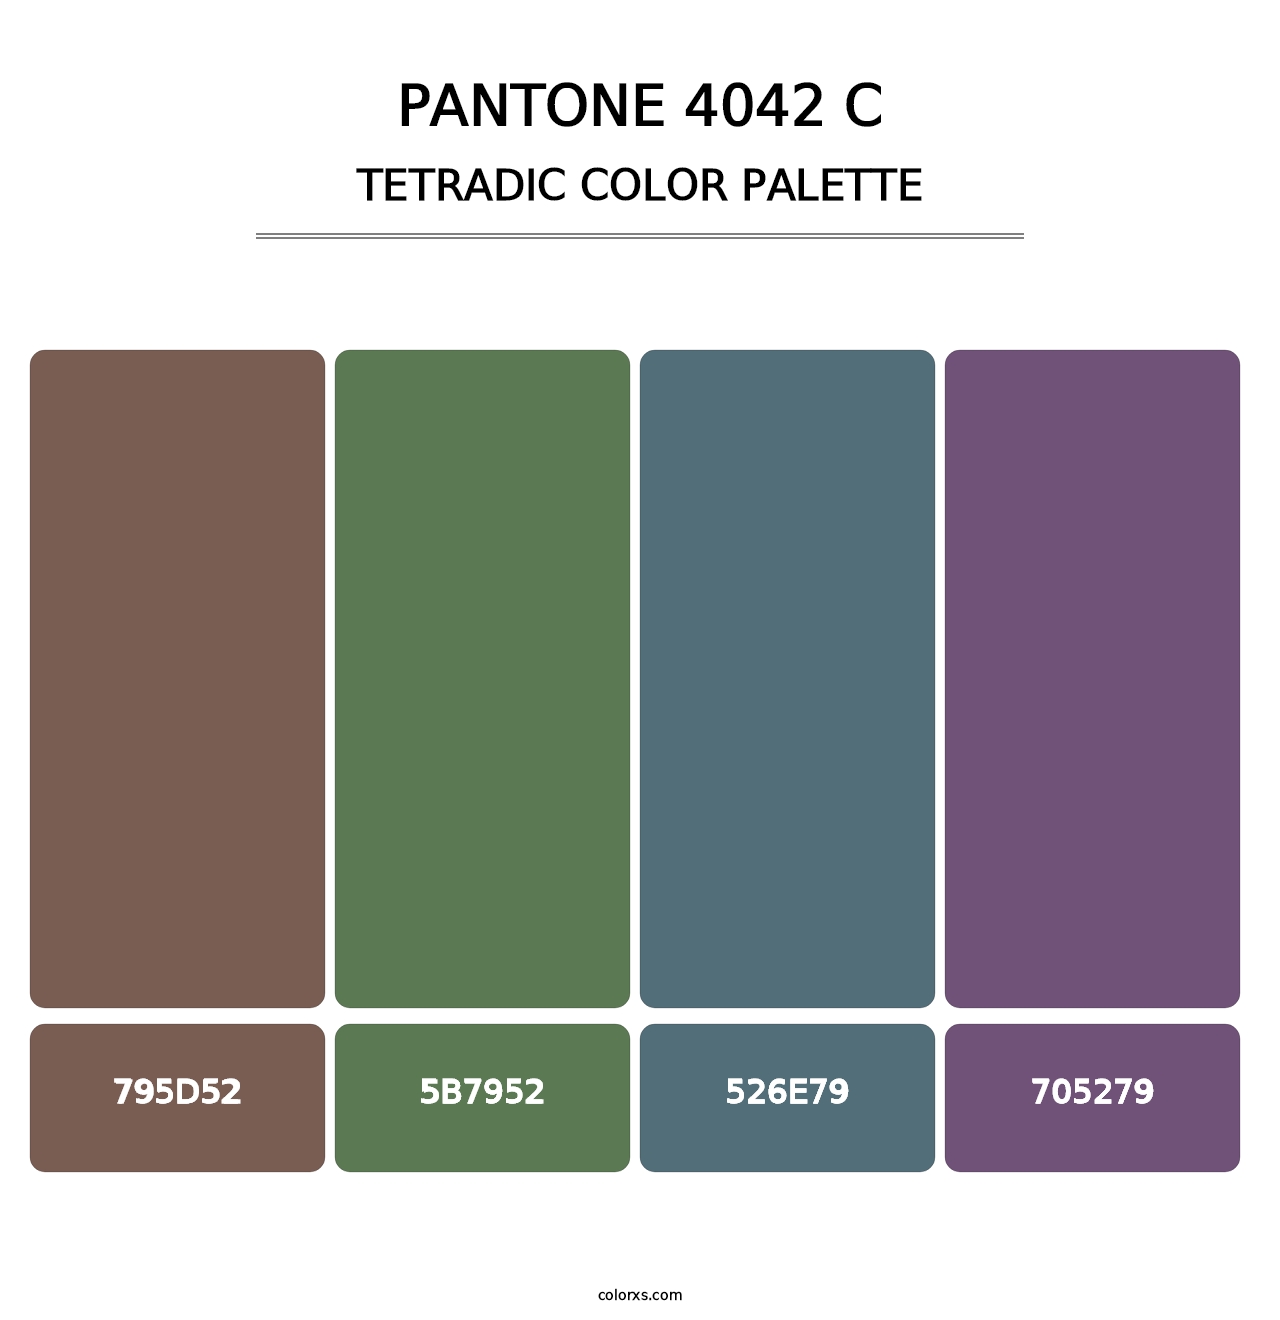 PANTONE 4042 C - Tetradic Color Palette